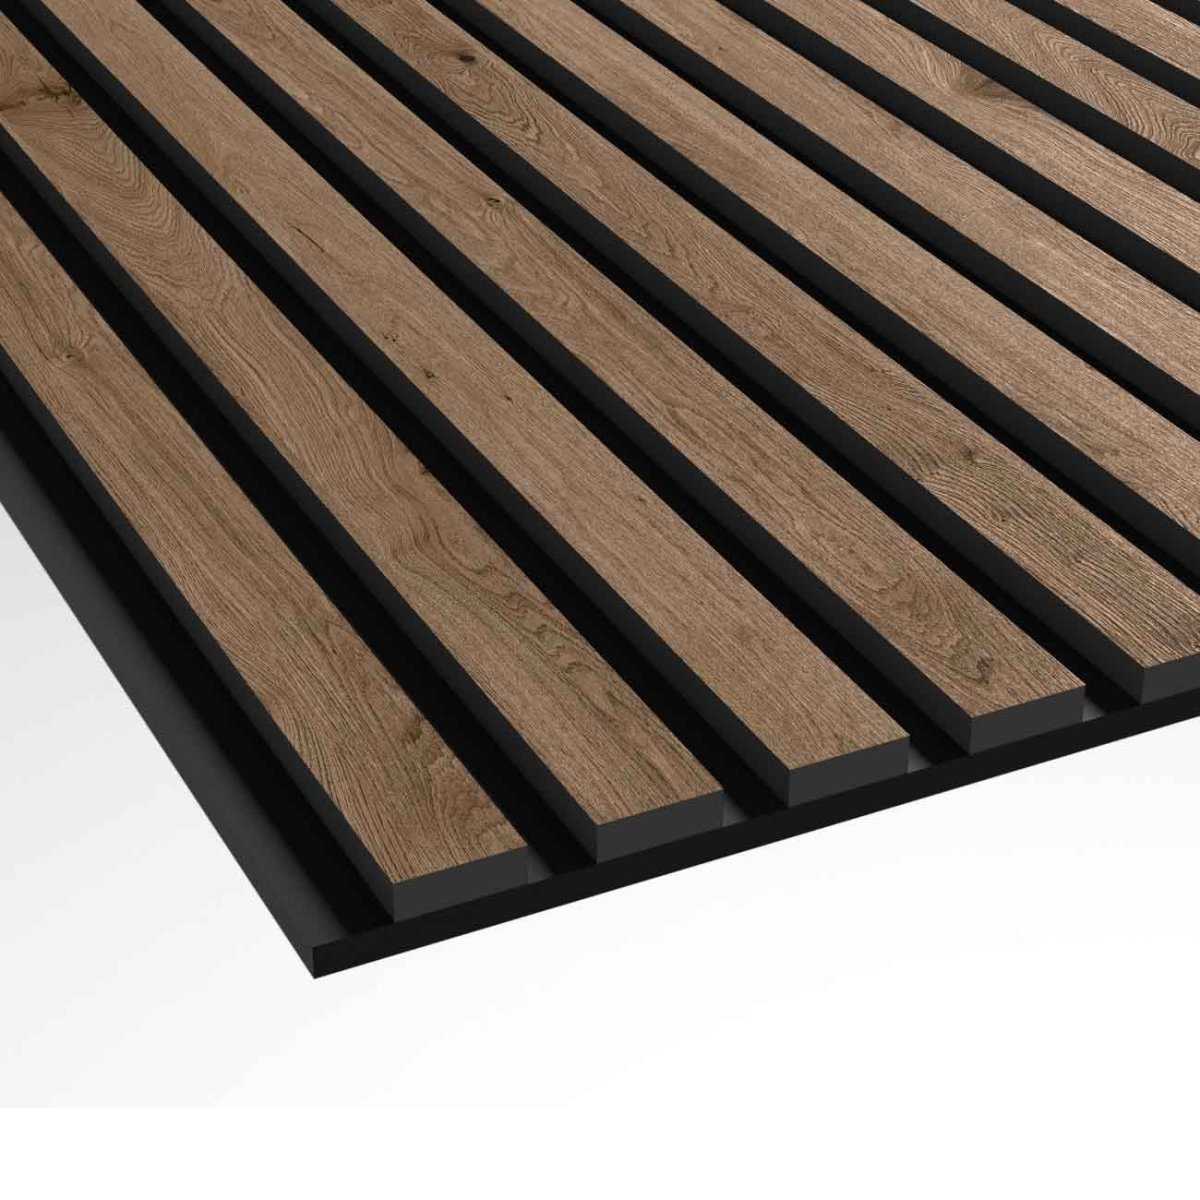 Wooden slat wall, wall panels & acoustic panels » WoodUpp